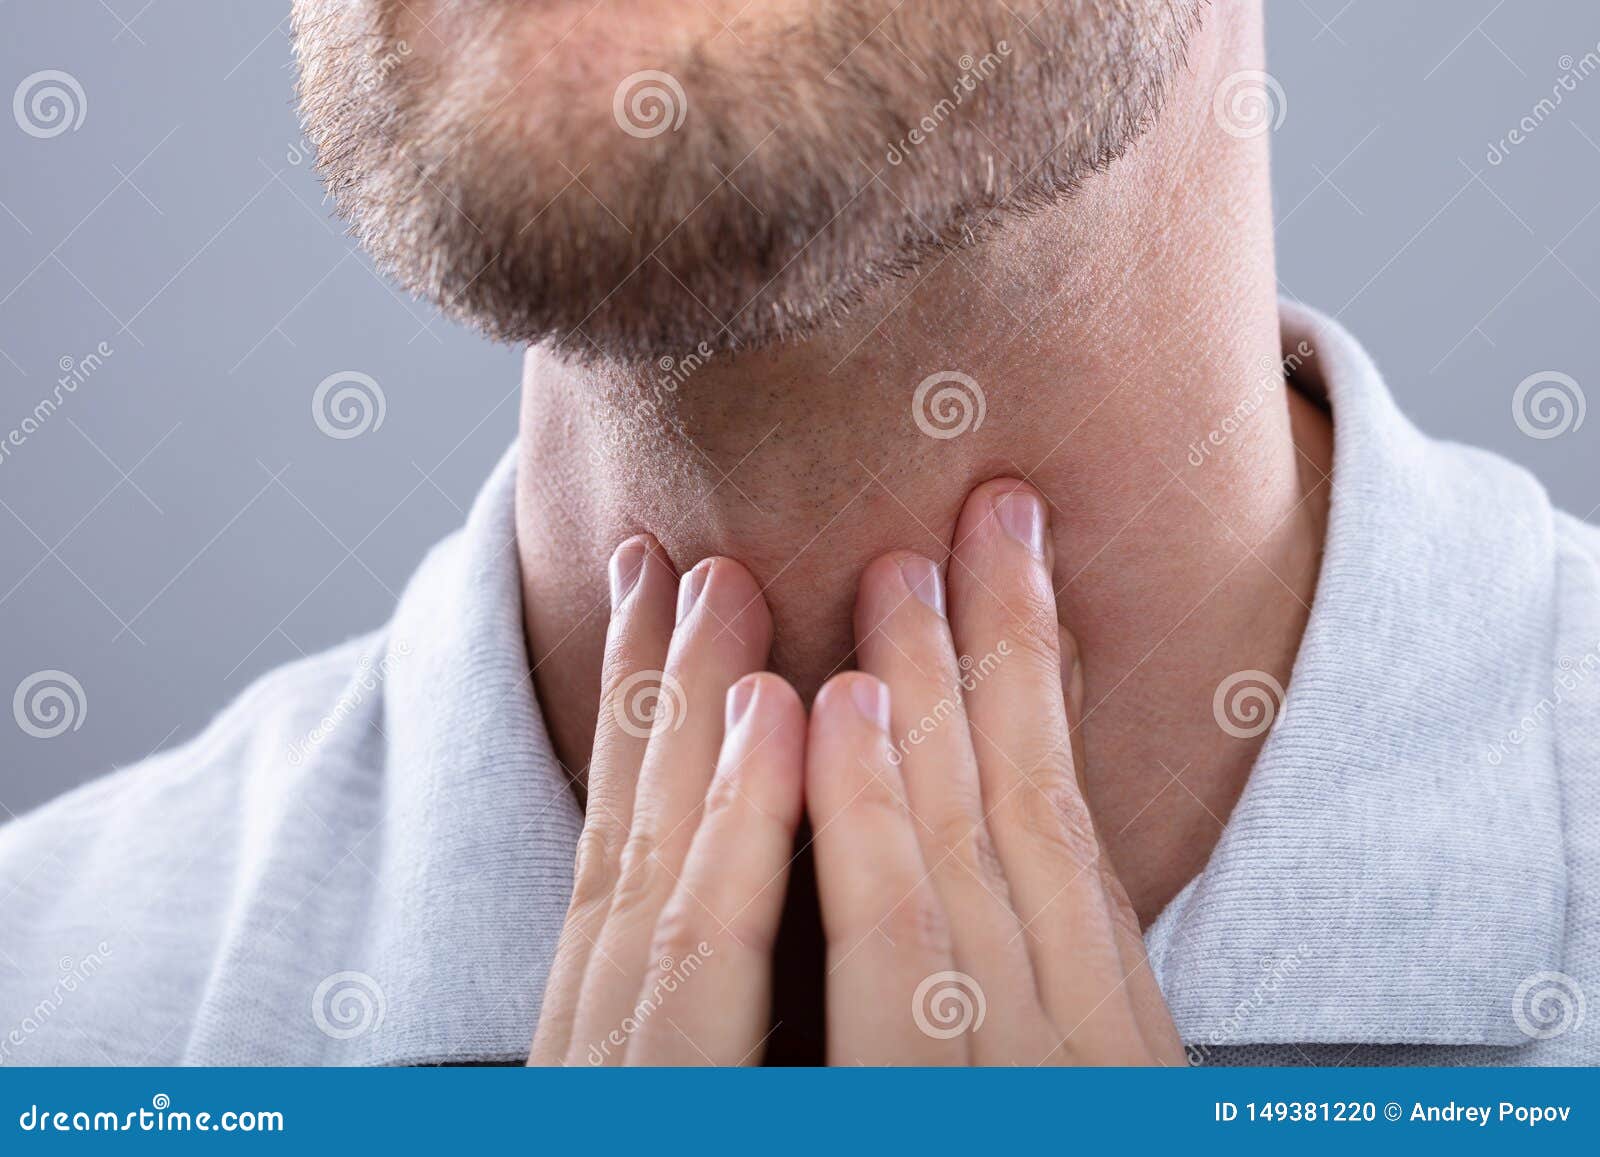 man having sore throat